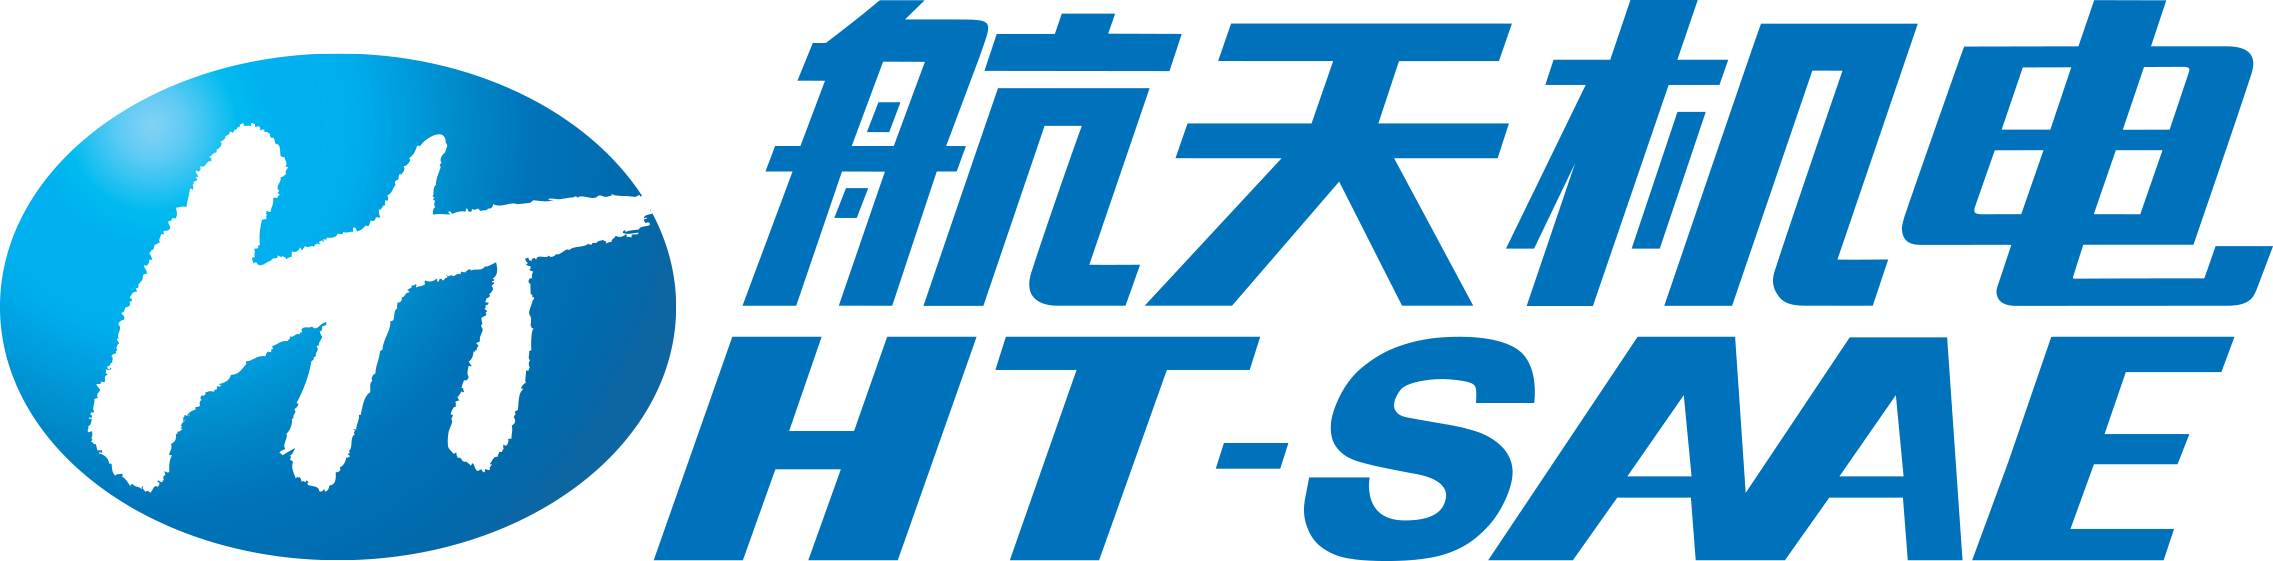 HT-SAAE logo